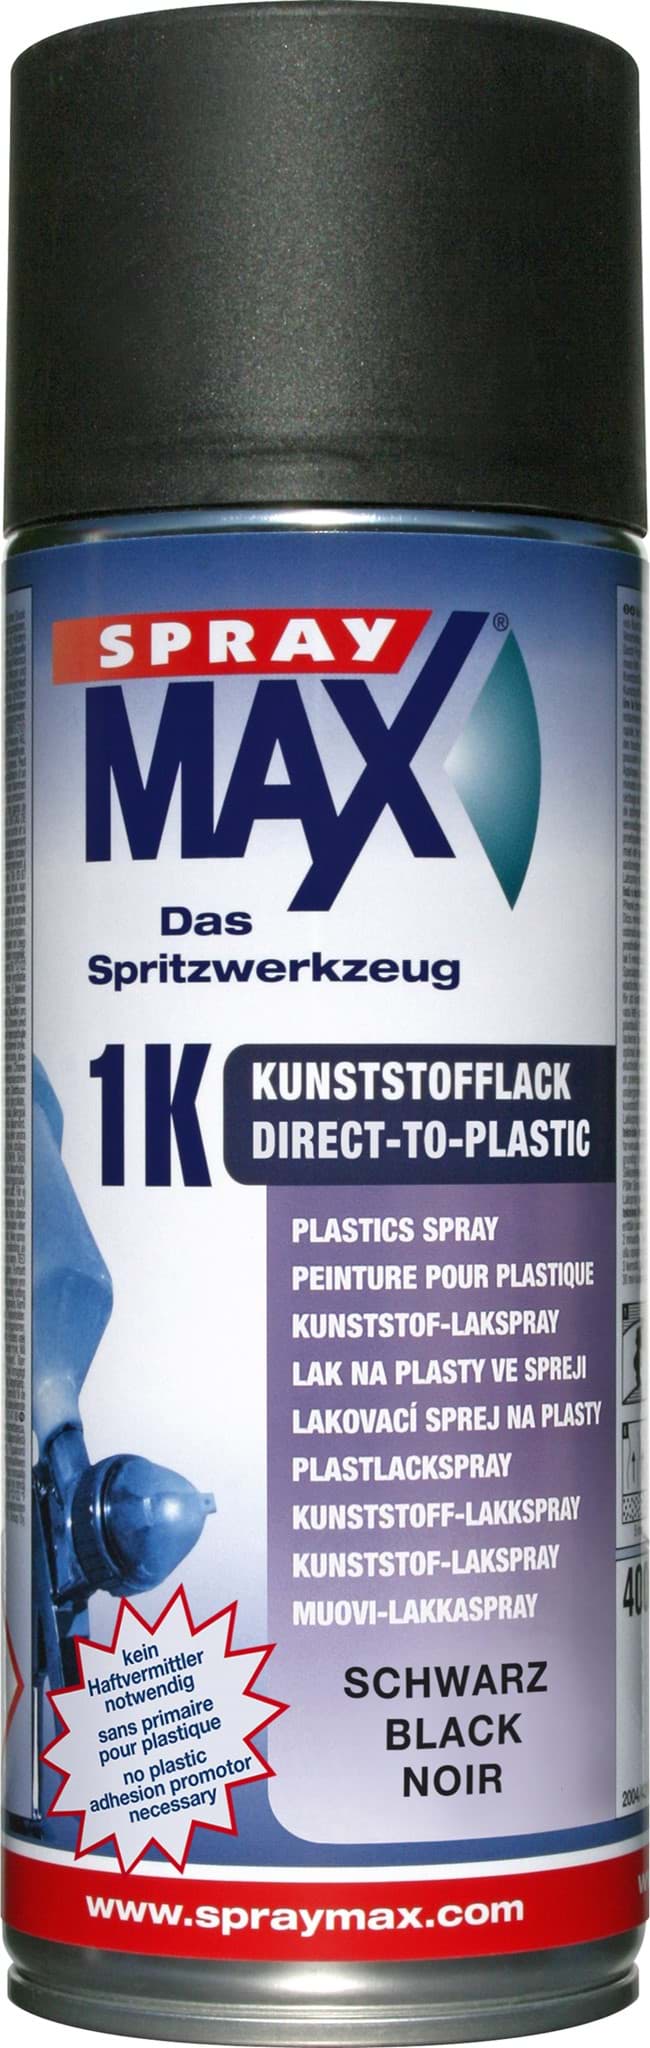 Obraz SprayMax 1K DTP-Kunststofflack Schwarz 400ml 680046